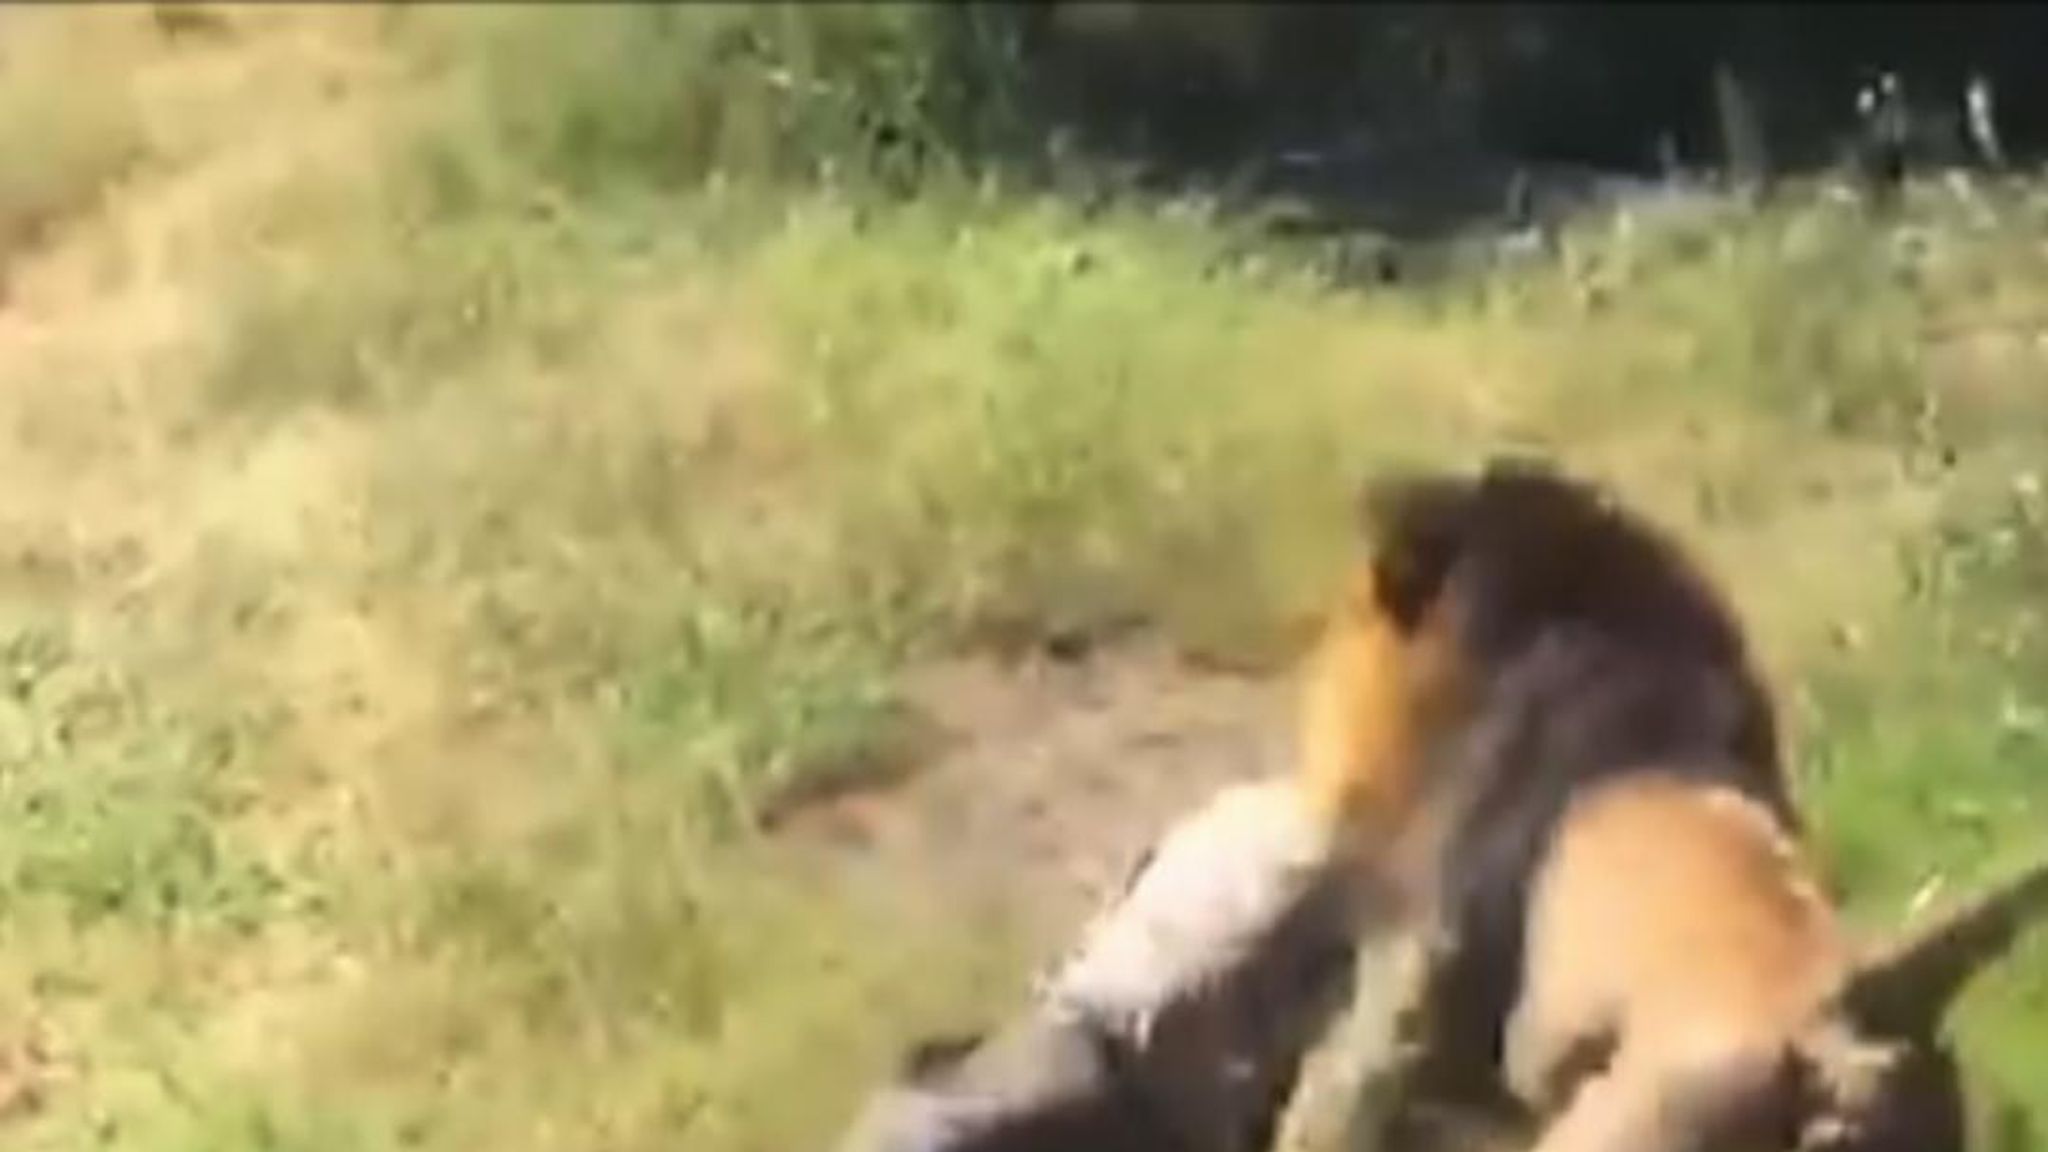 man eating lions